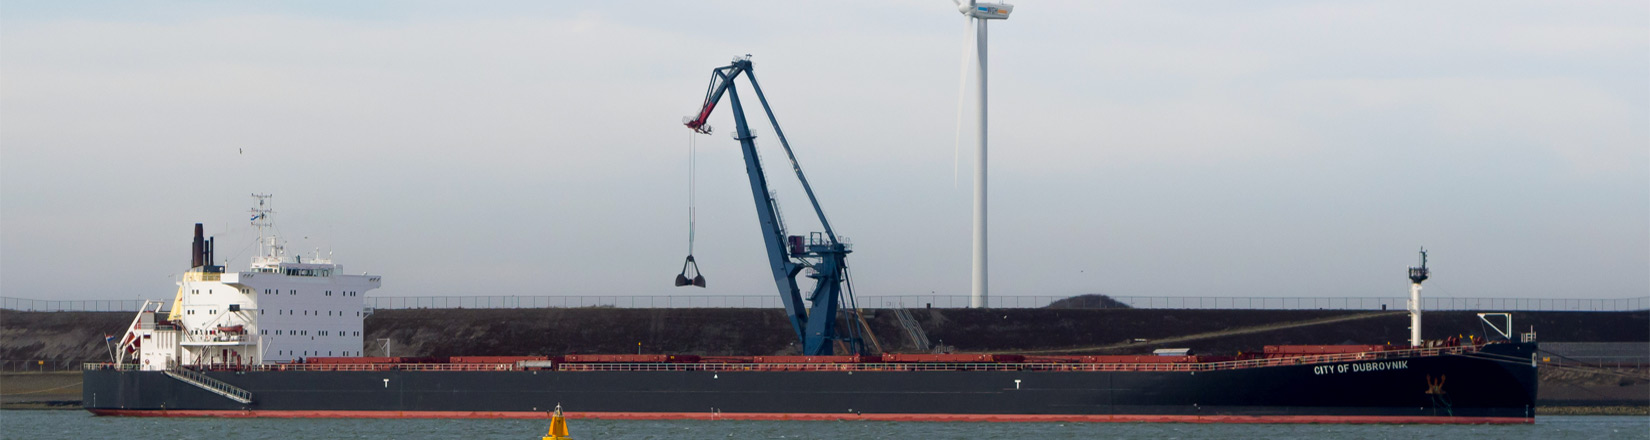 amsterdam bulk handling floating crane ijmond